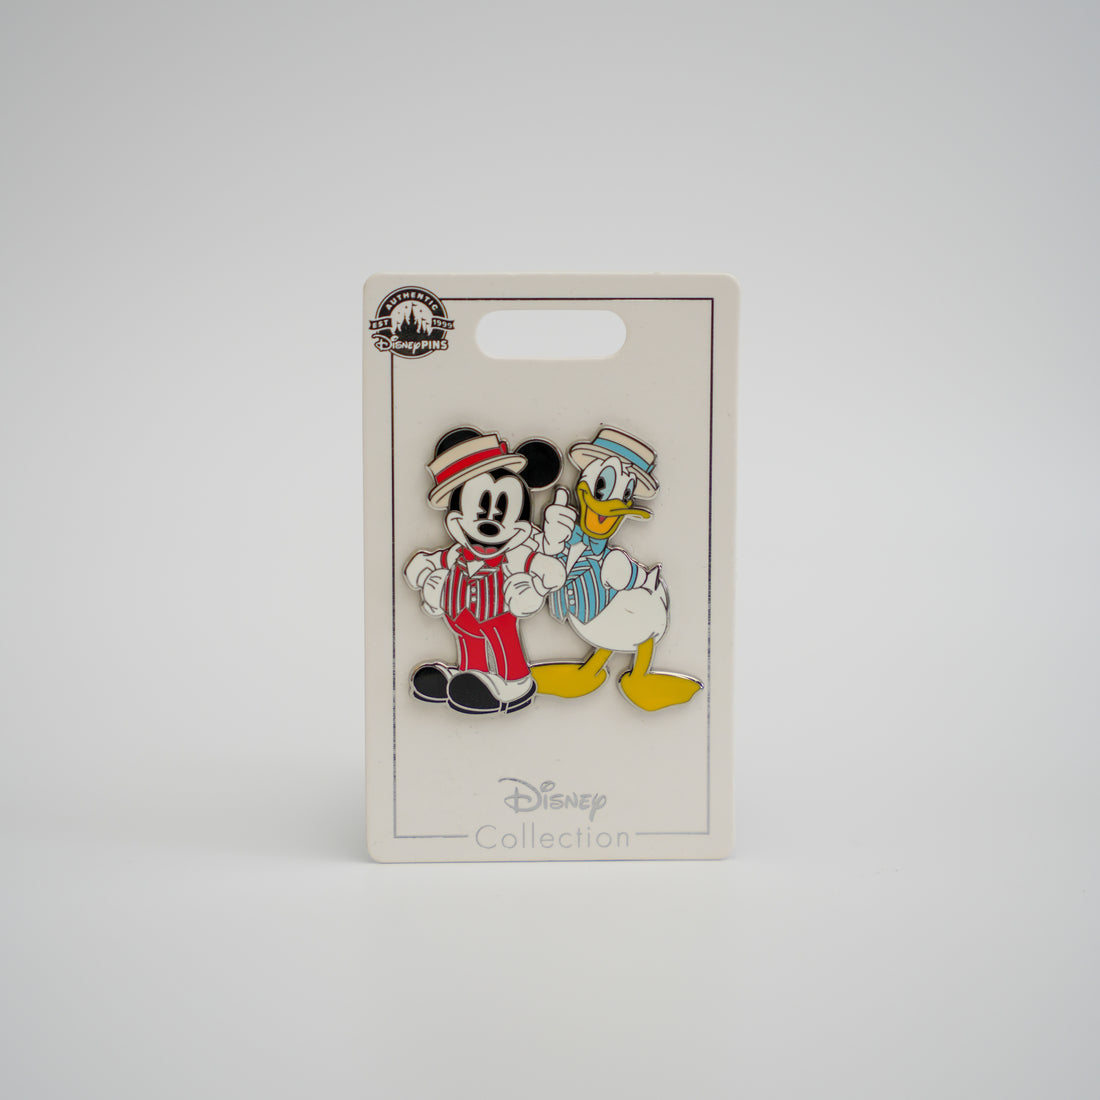 Disney Parks Pin - Mickey Mouse Donald Duck Dapper Dans Main Street USA Singers